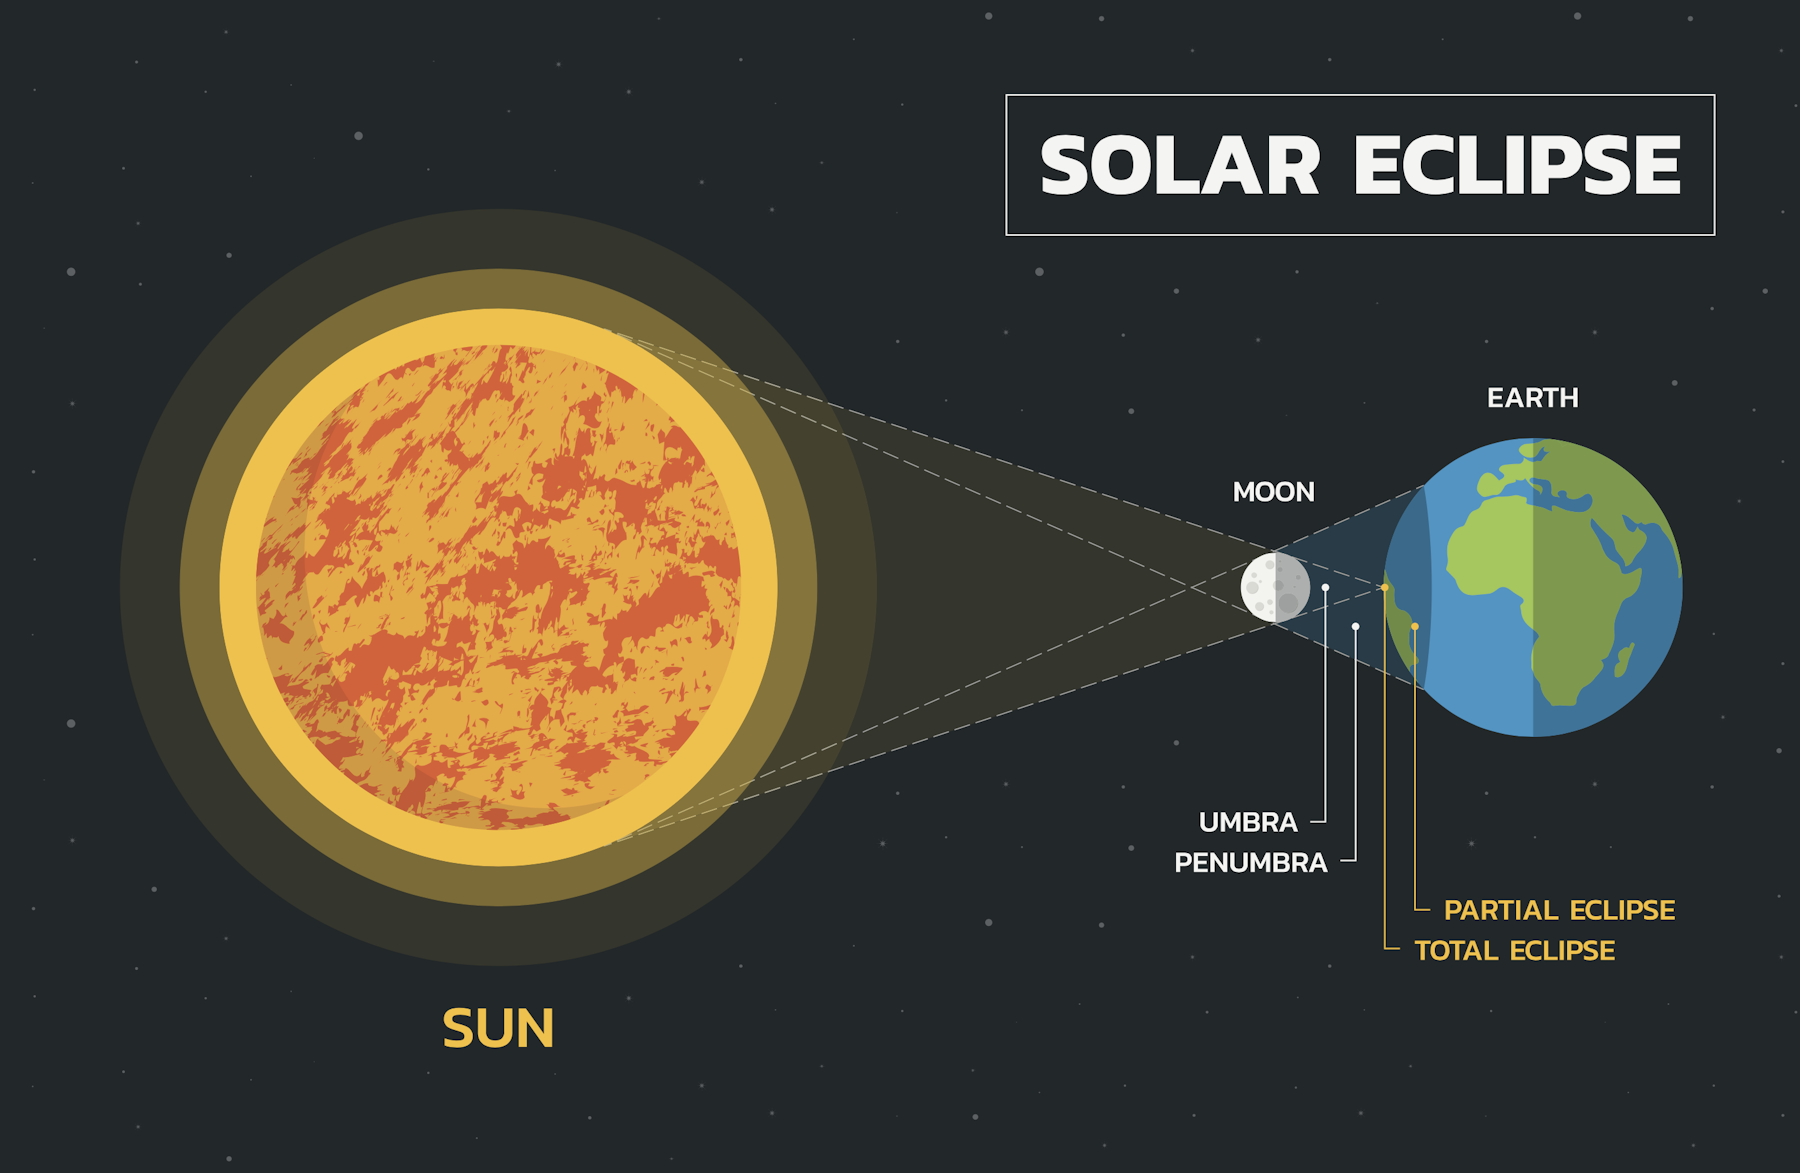 Four ways to enjoy a solar eclipse